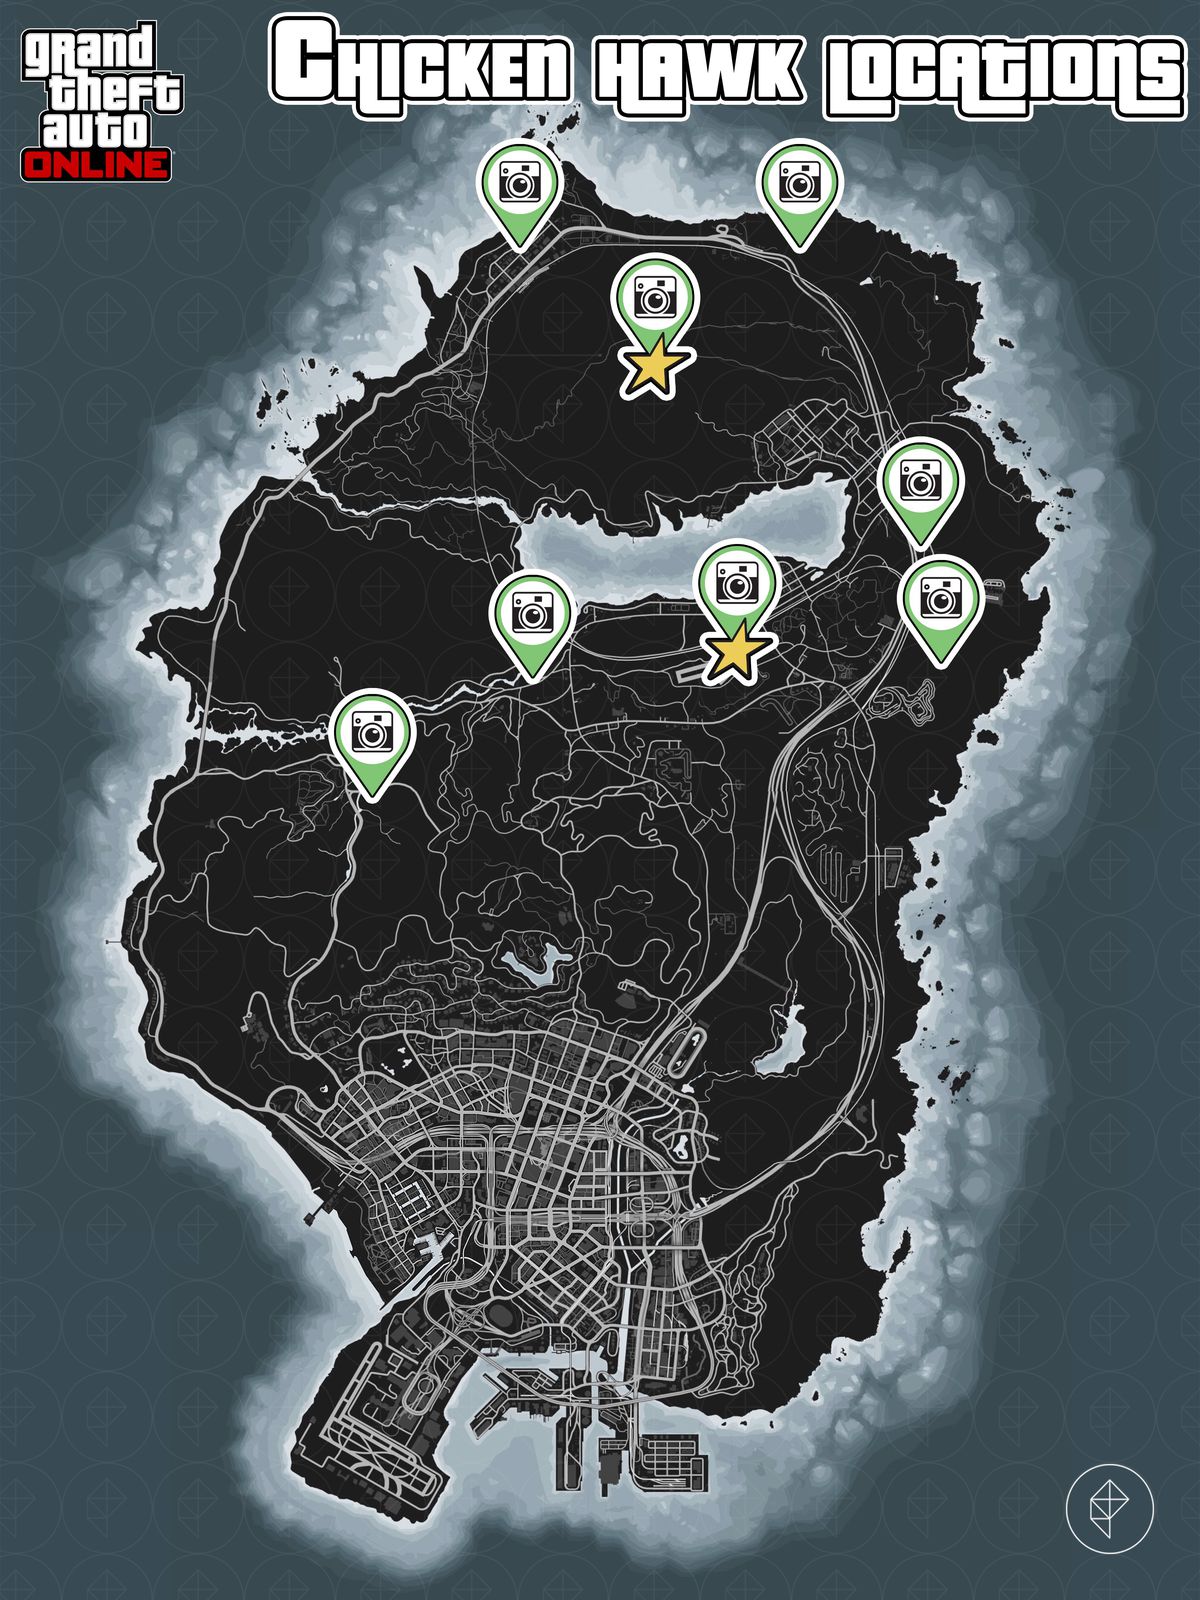 GTA Online map showing chicken hawk locations